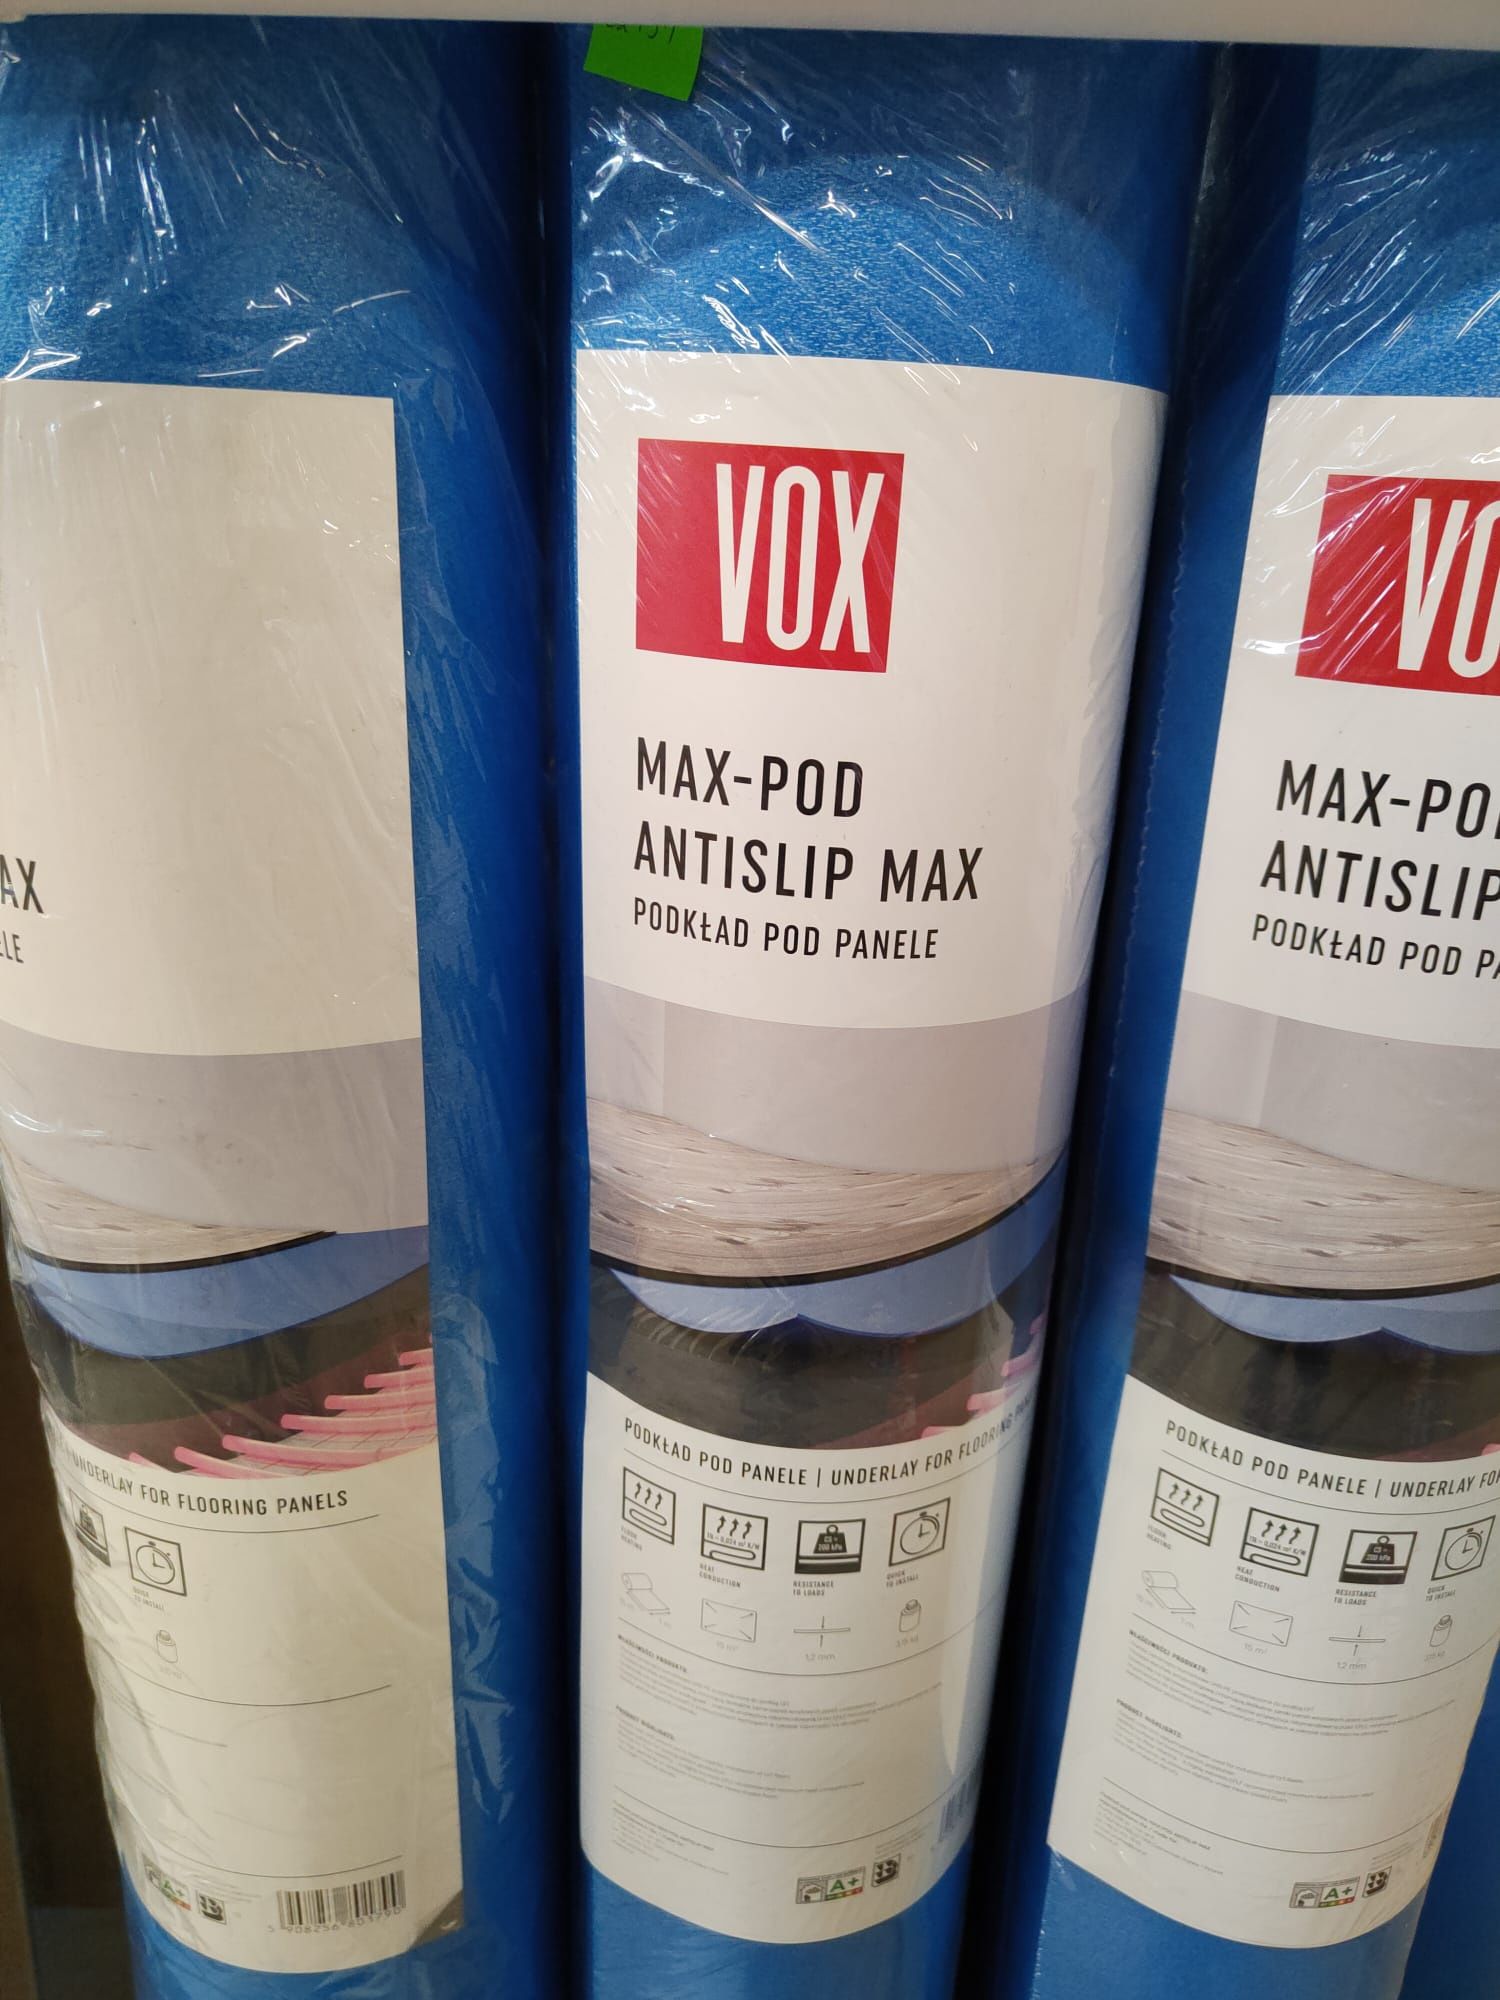 Podkład pod panele MAX-POD Antislip Max
Cena 205 za rolkę